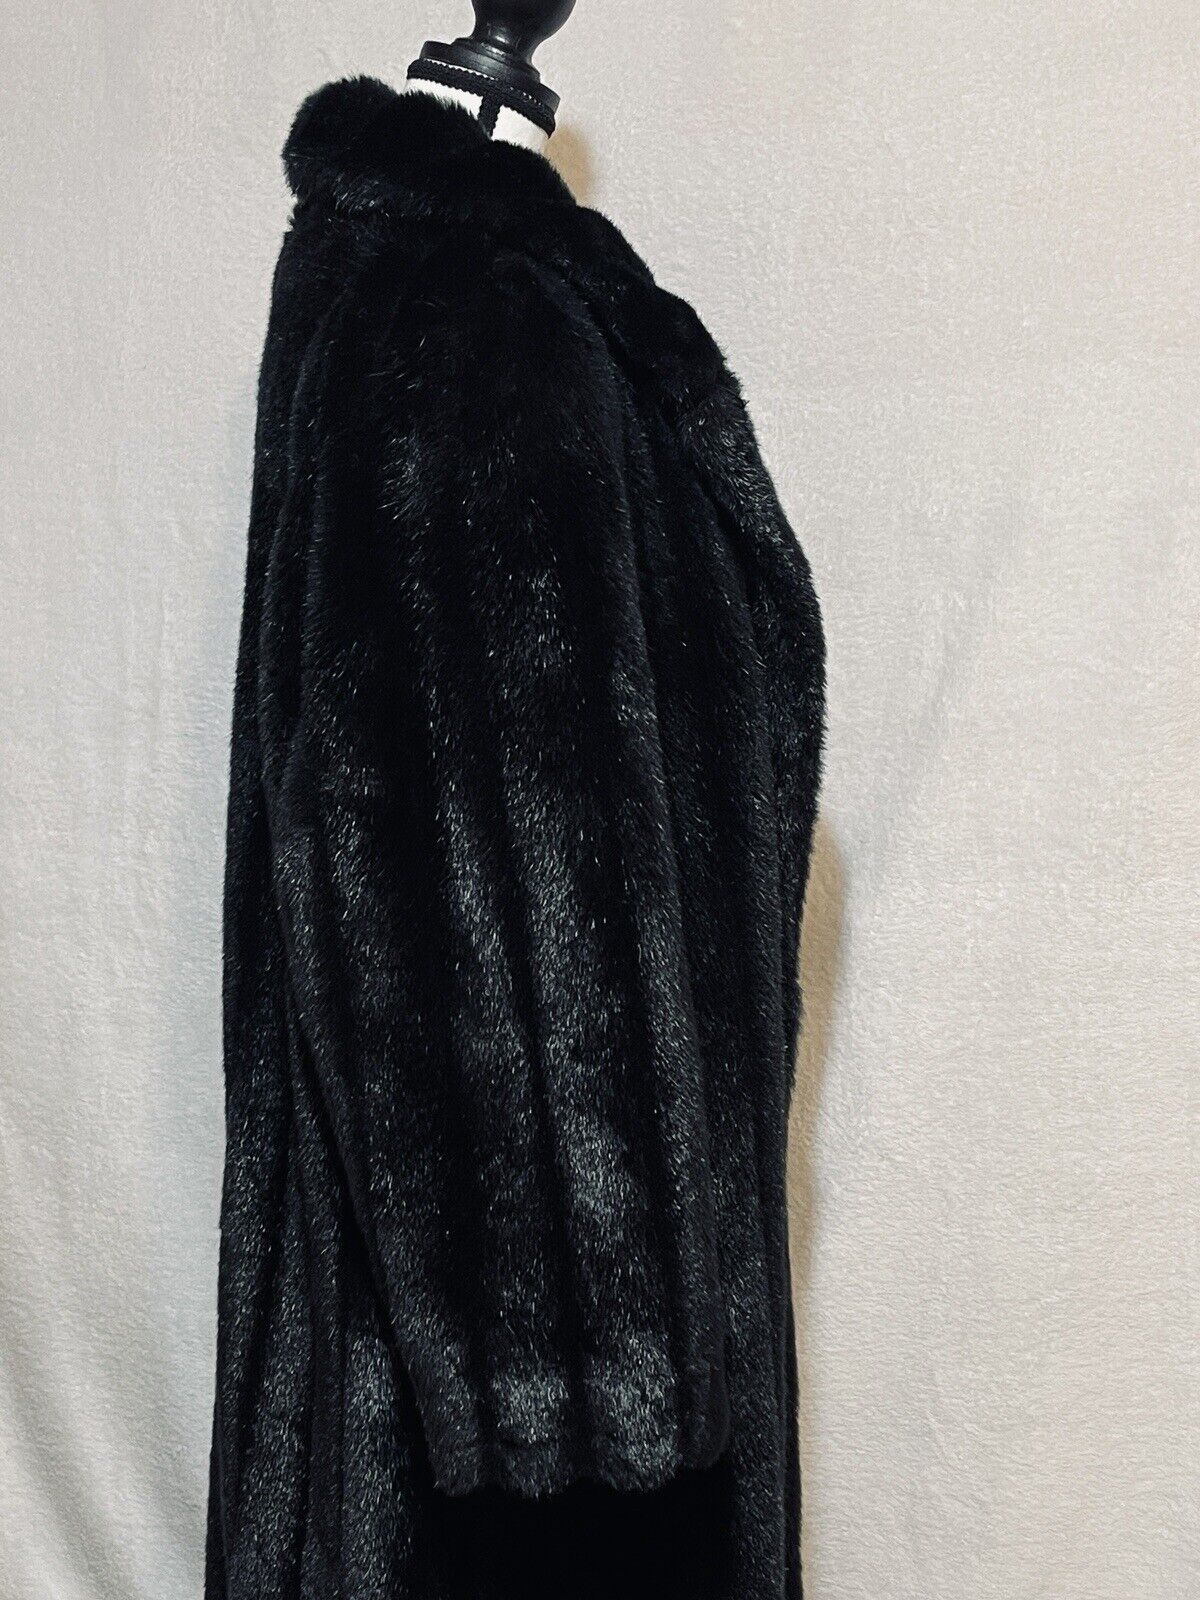 STYLE VI LTD Vintage Faux Fur Coat Size L XL Black Mink Long Full Length Lined